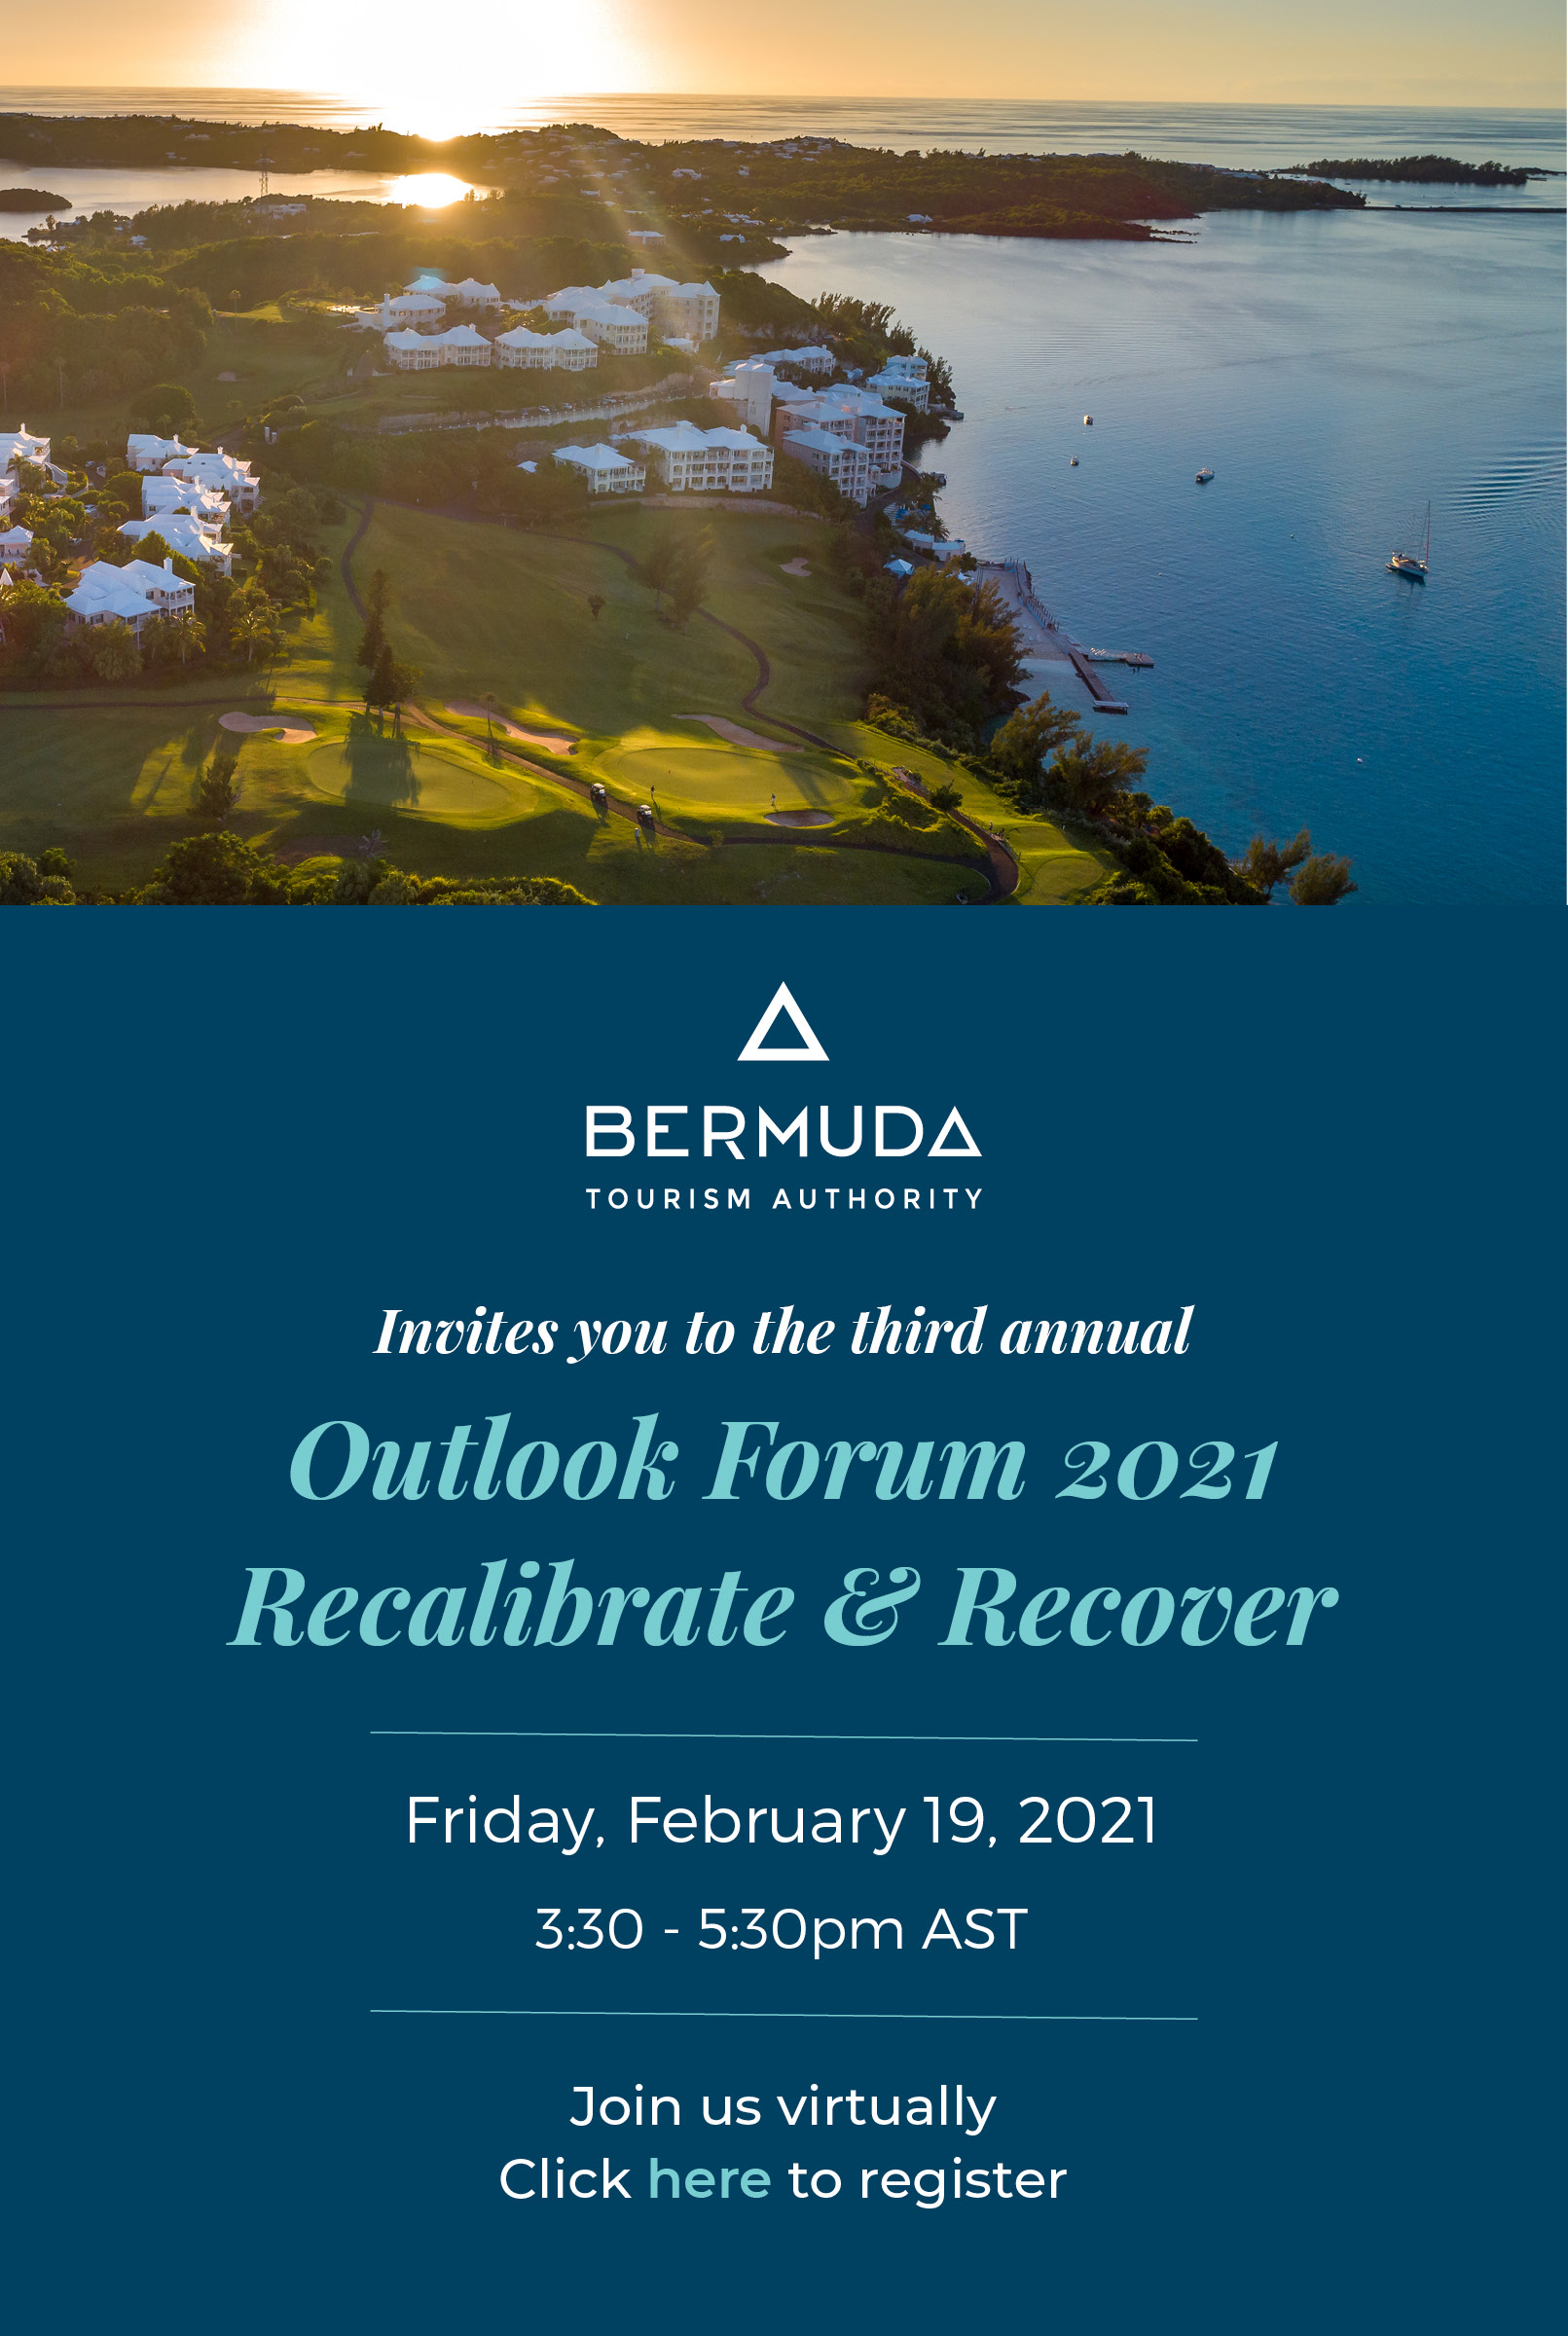 Recalibrate & Recover - Outlook Forum 2021